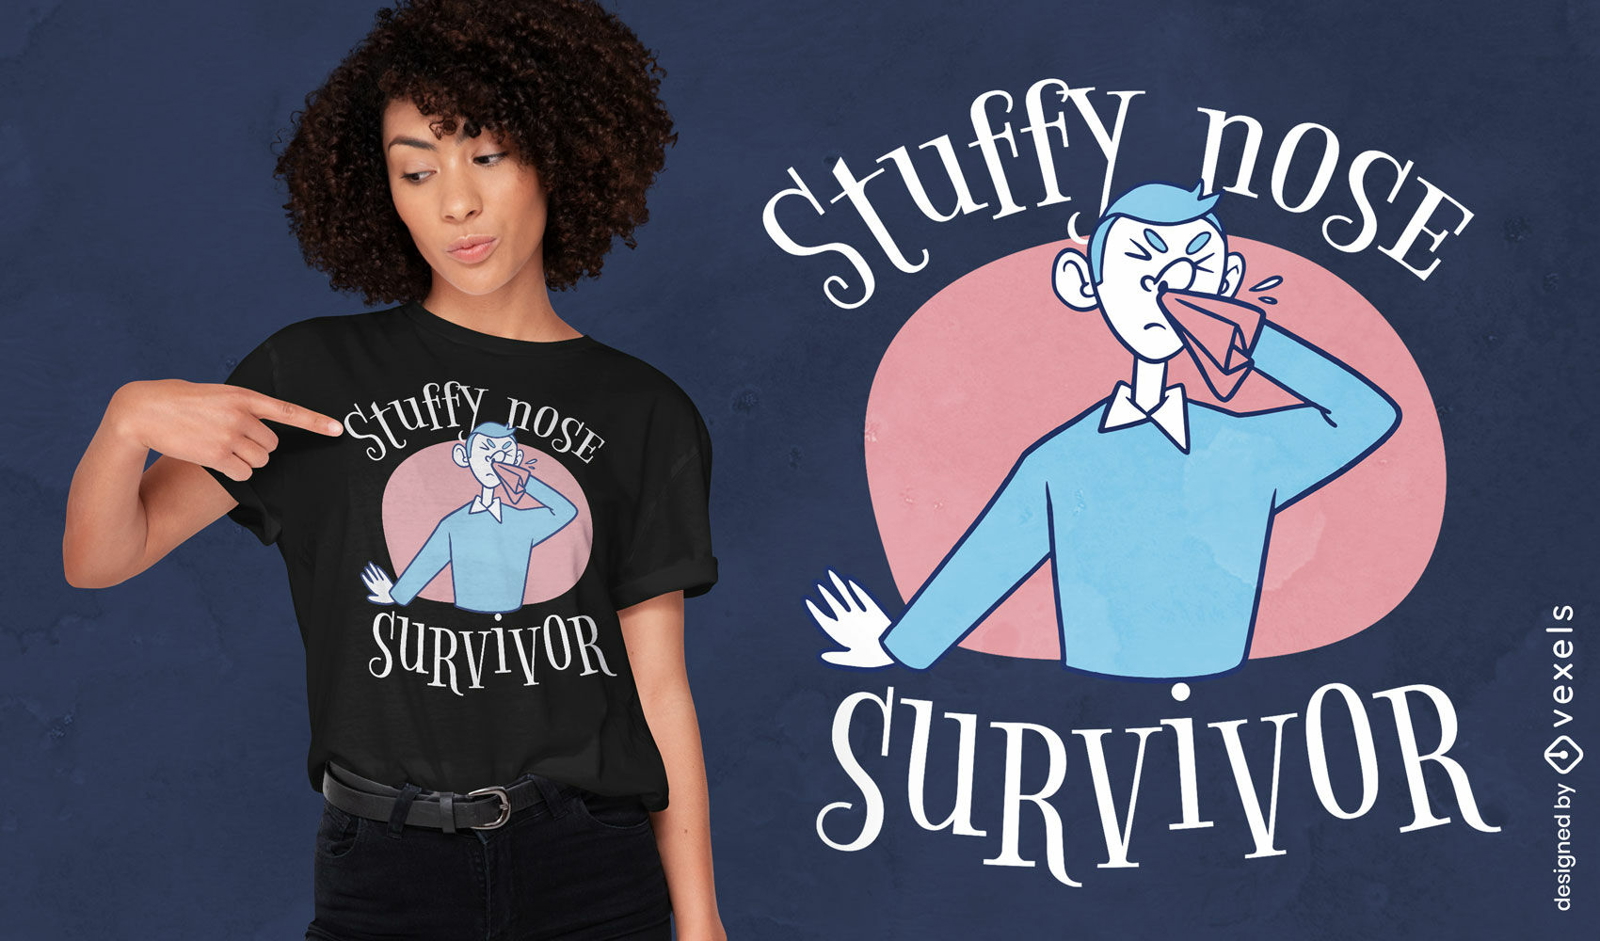 Stuffy nose survivor t-shirt design